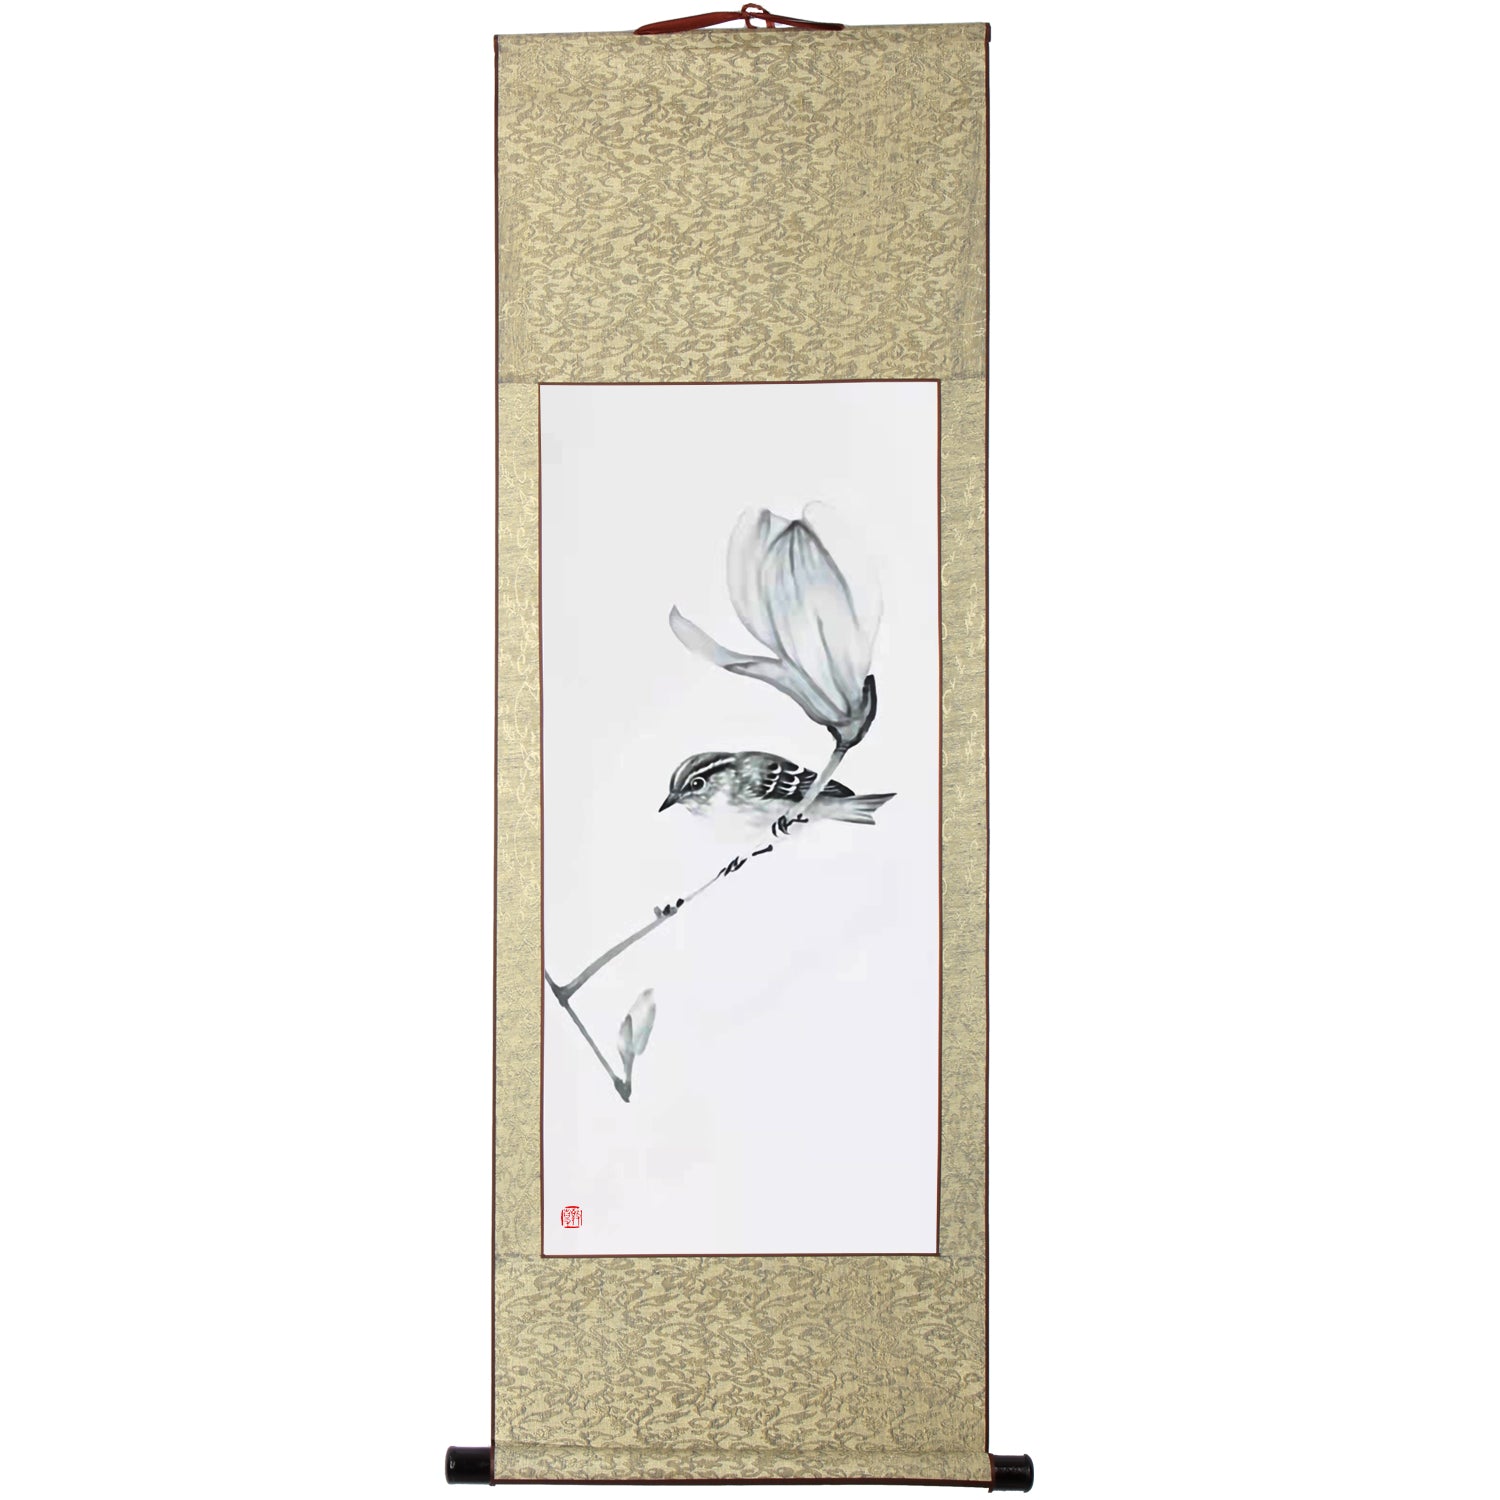 水墨画 掛け軸 四季花鳥画(図) 掛軸 画家の手描き 中国書画 美術国粋 